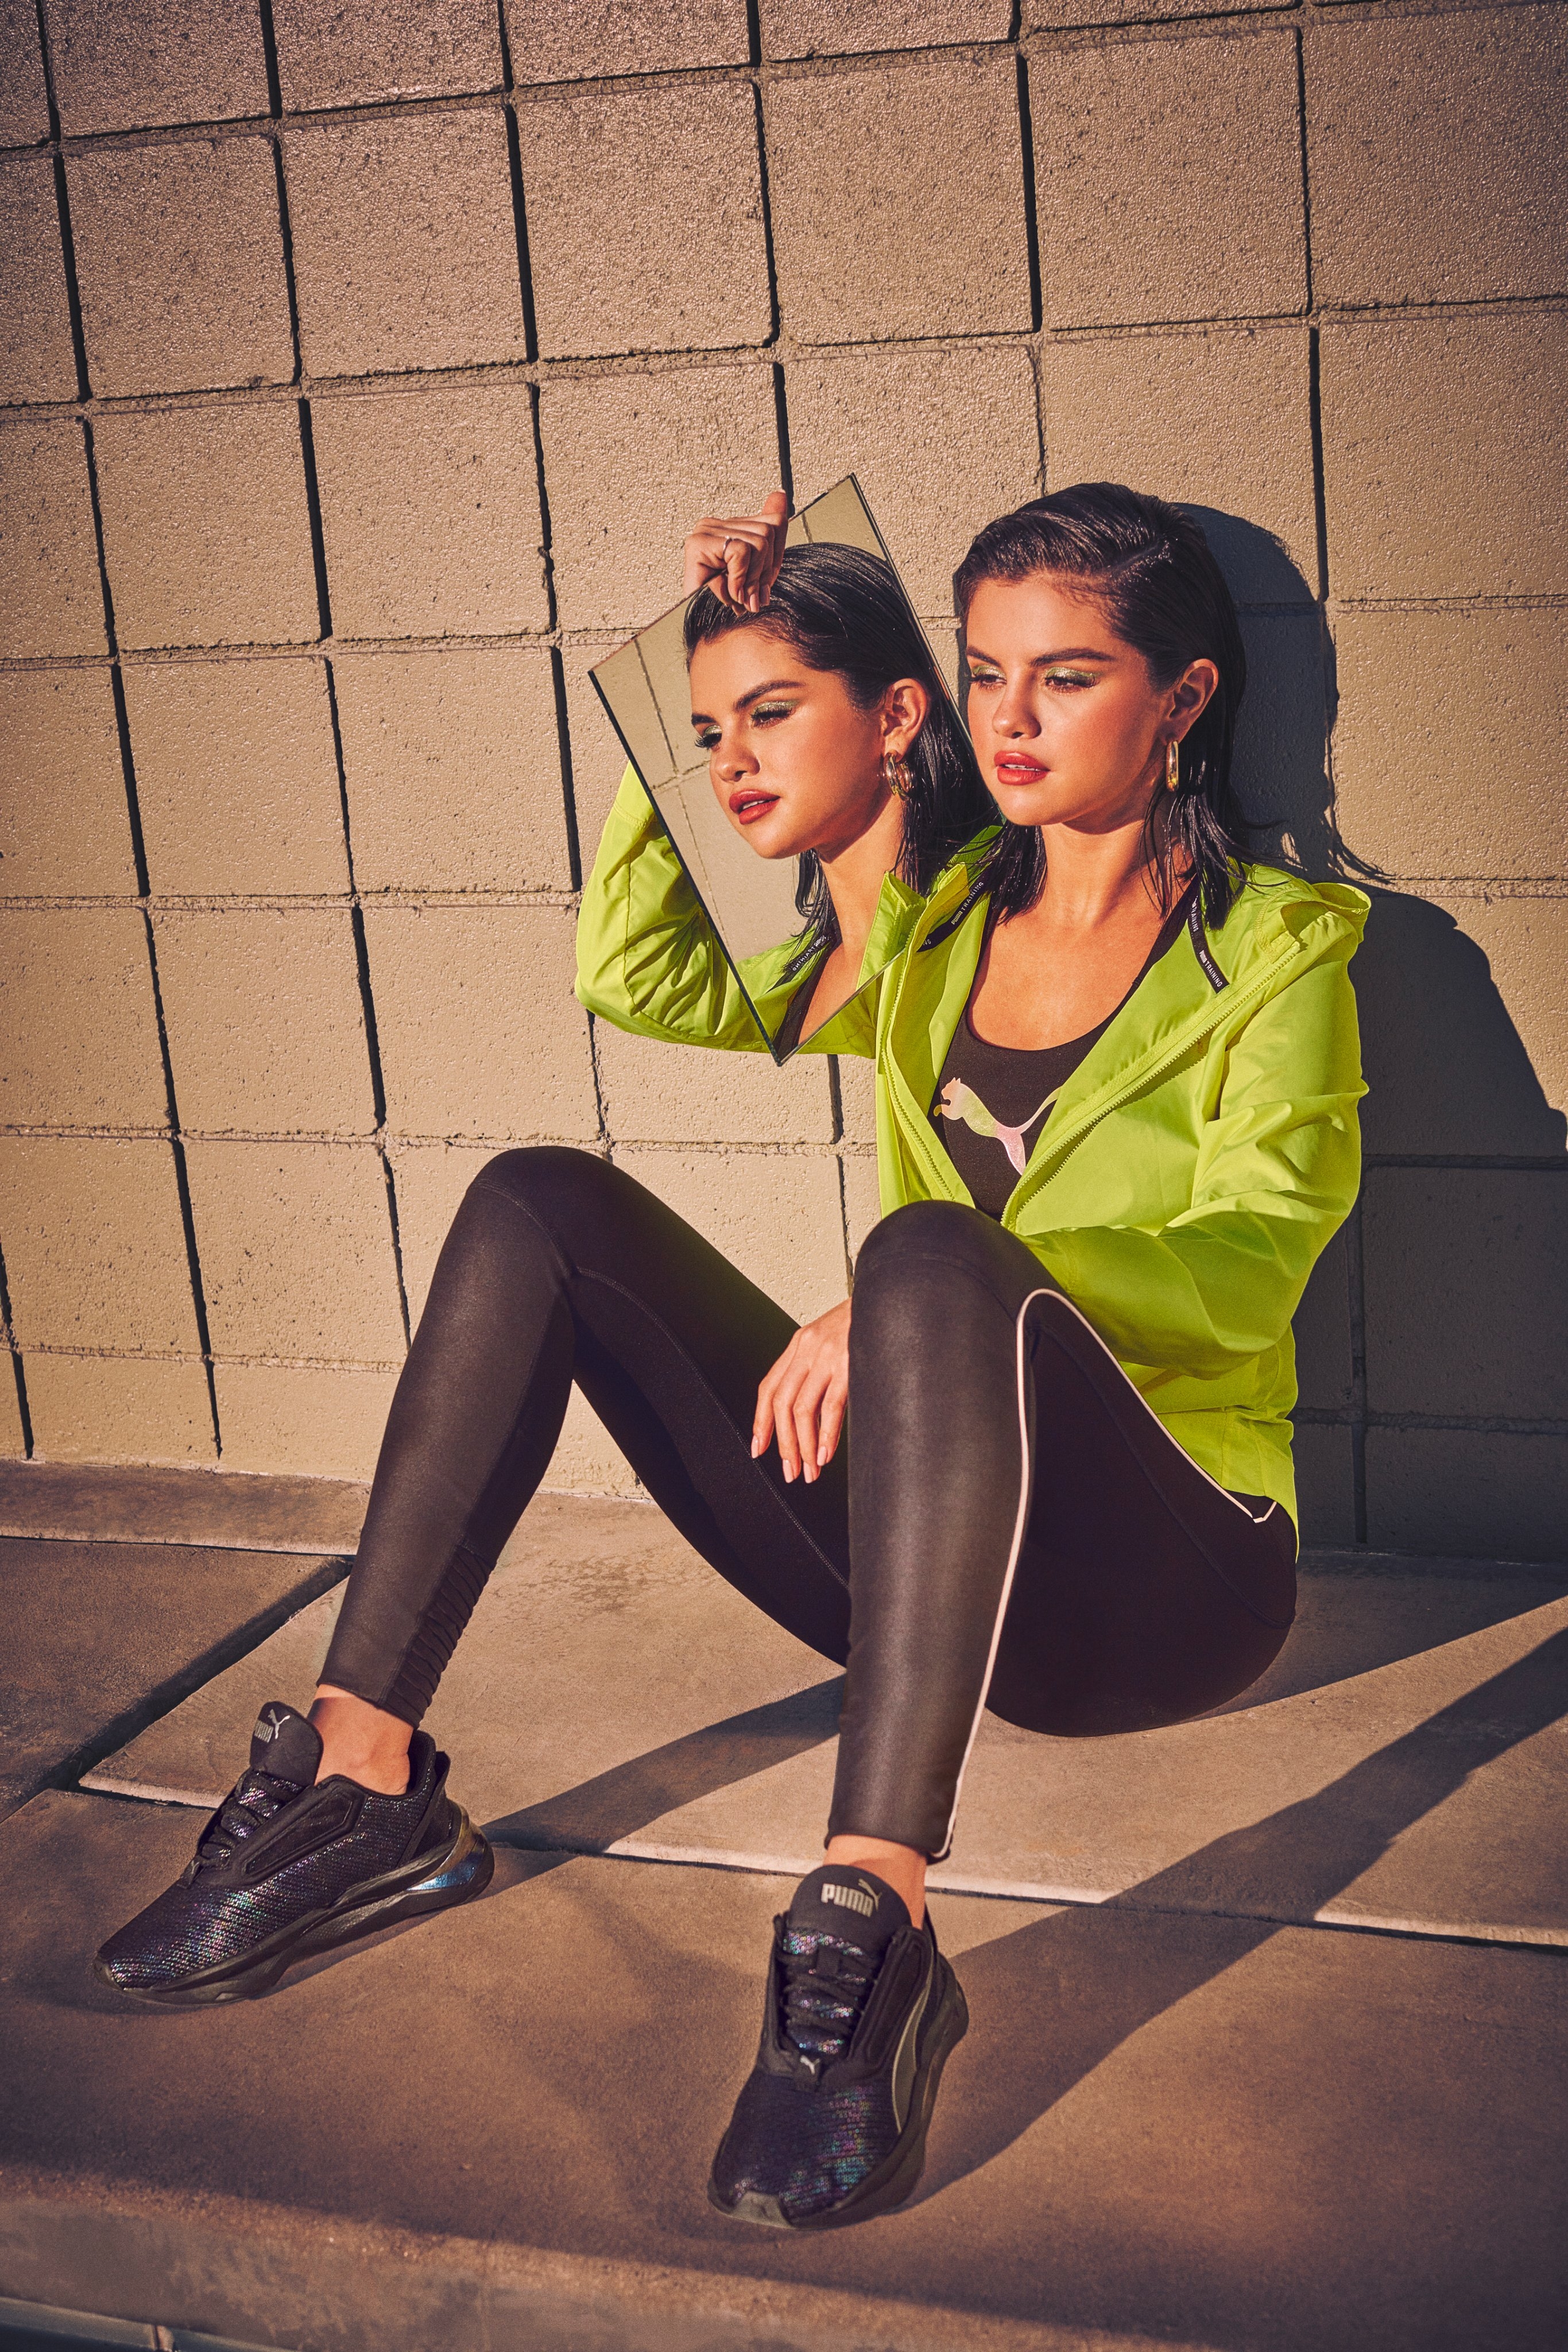 Selena Gomez 2019 Puma Photoshoot Wallpaper, HD Celebrities 4K Images, Photos Background - Wallpapers